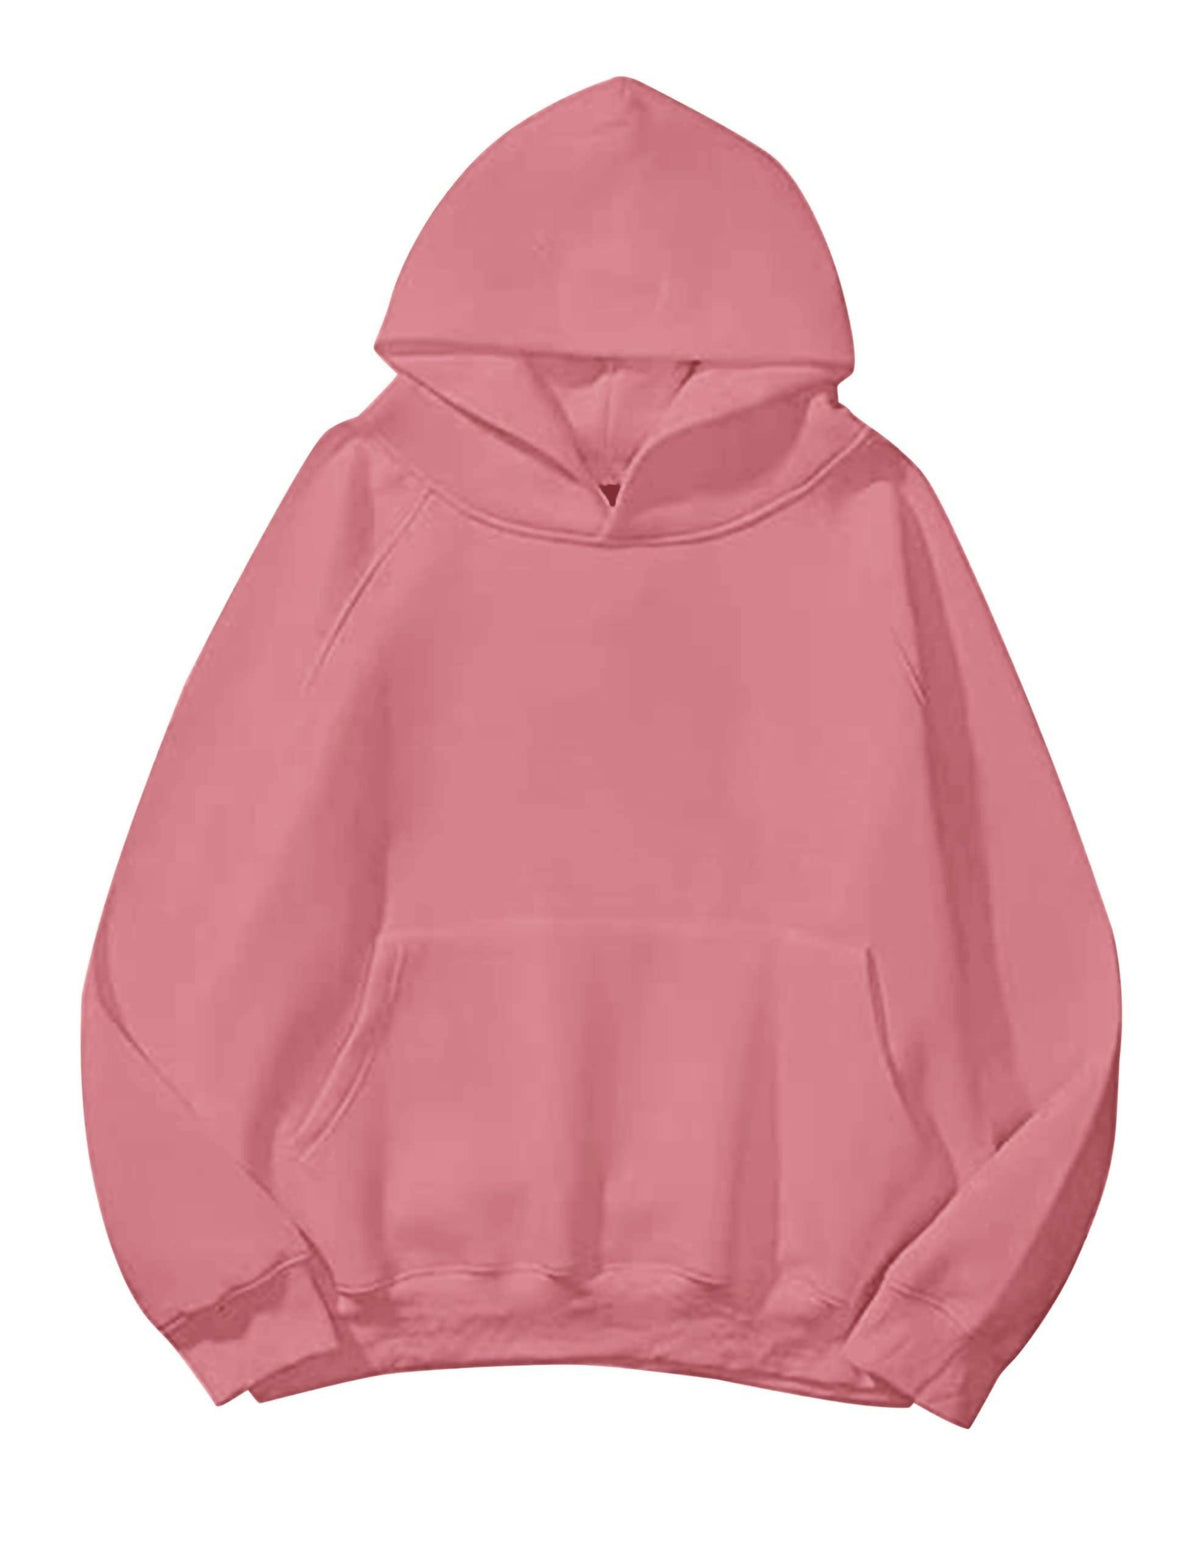 Khanani's Pink Plain Basic Pullover Hoodie for Winter - Fleece Hooded Hoodies for Men and Women - ValueBox